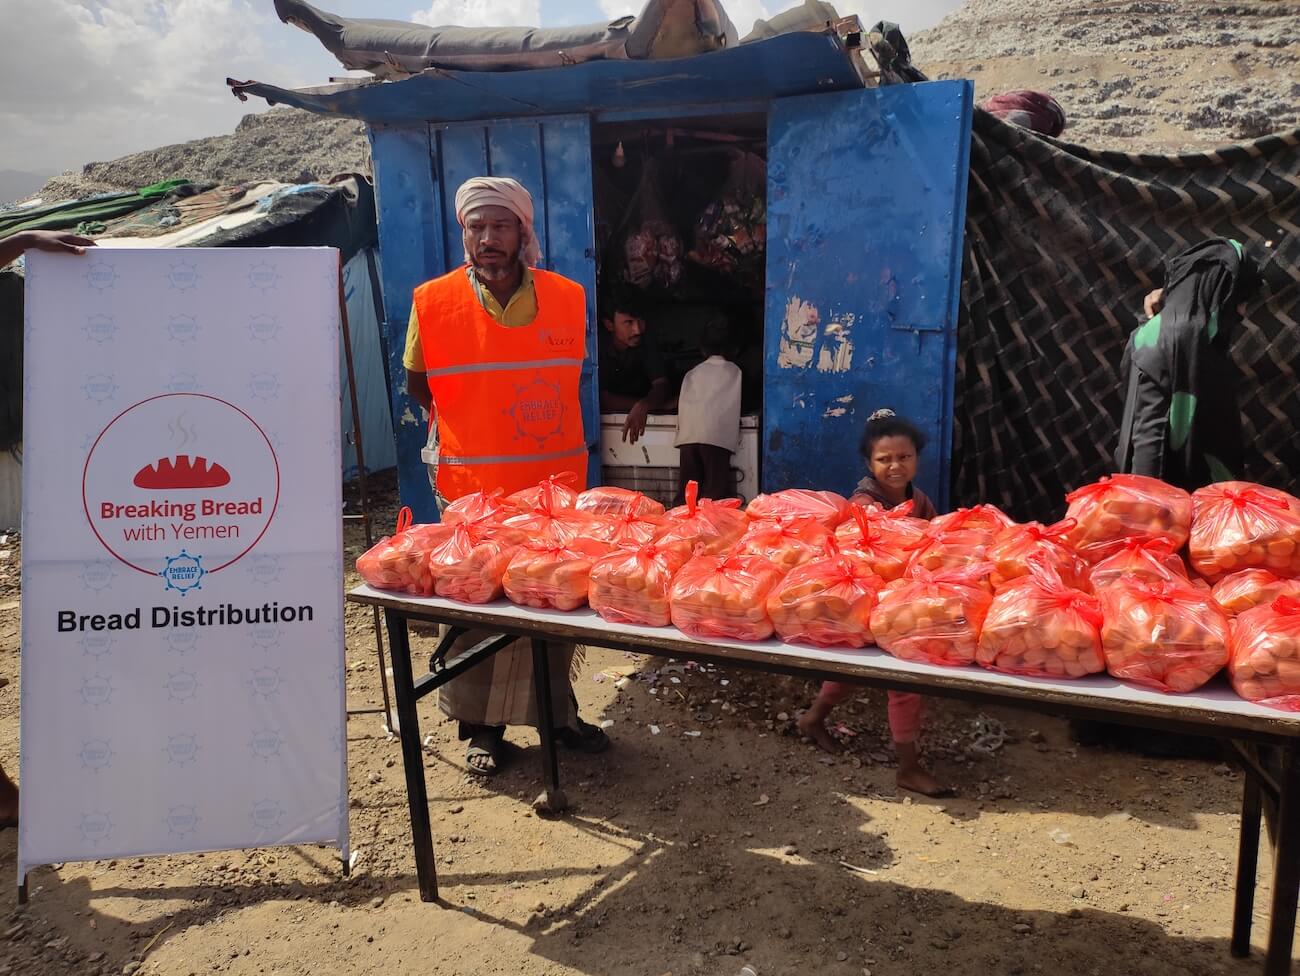 Breaking bread with the people of Yemen